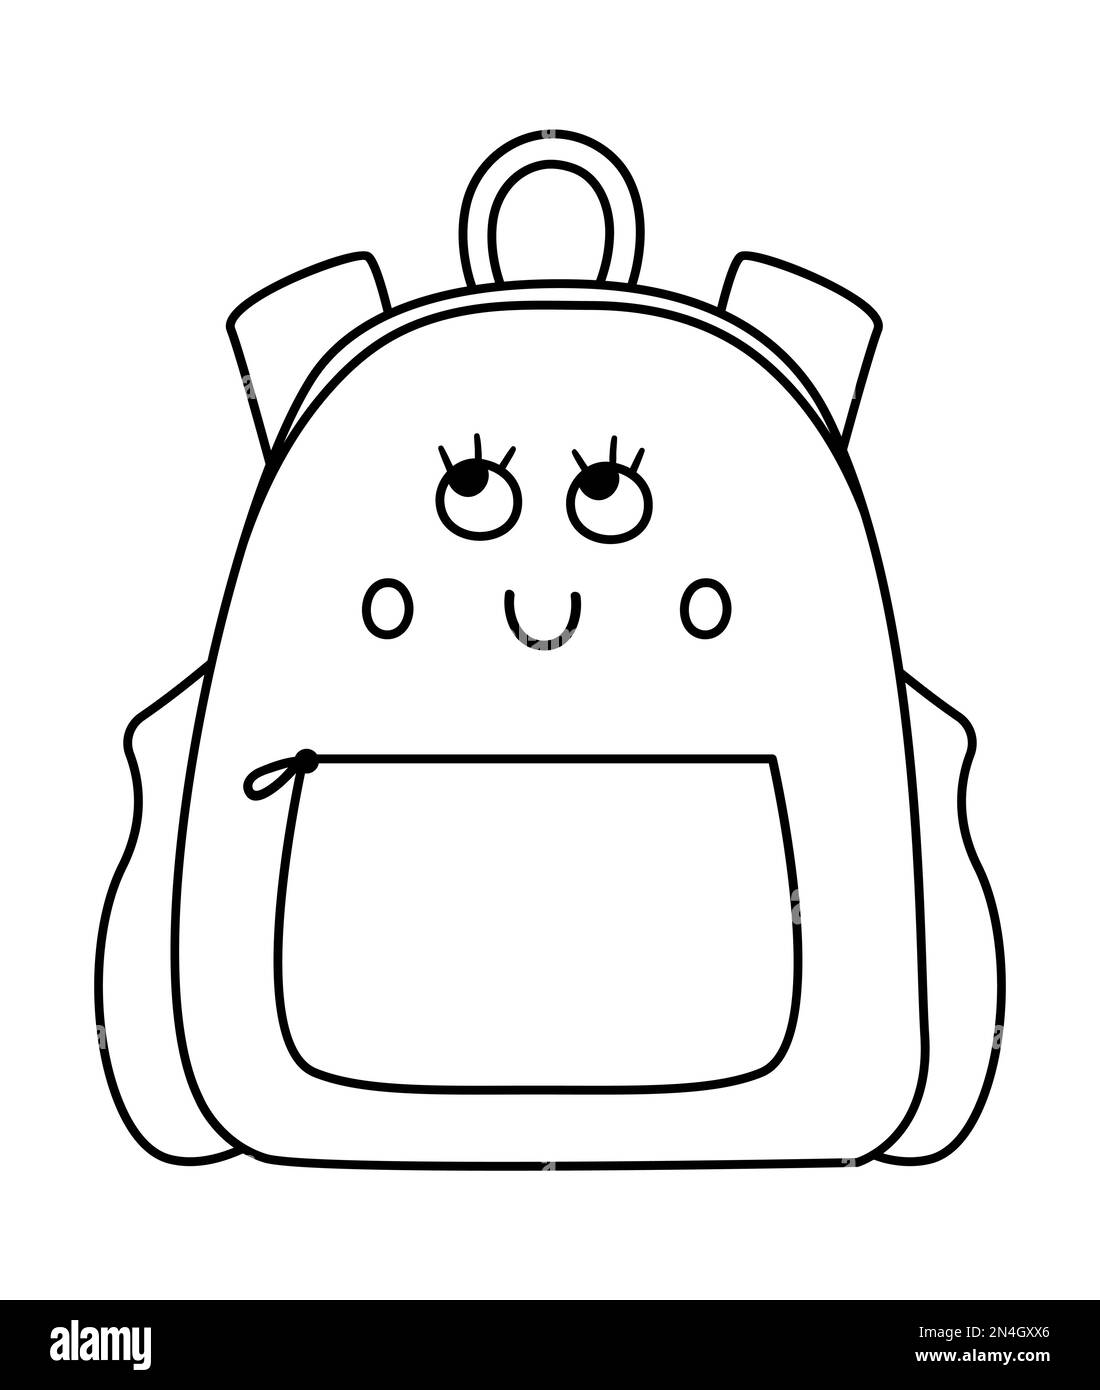 Backpack Bag Clip art - backpack png download - 3807*3723 - Free  Transparent png Download. - Clip Art Library